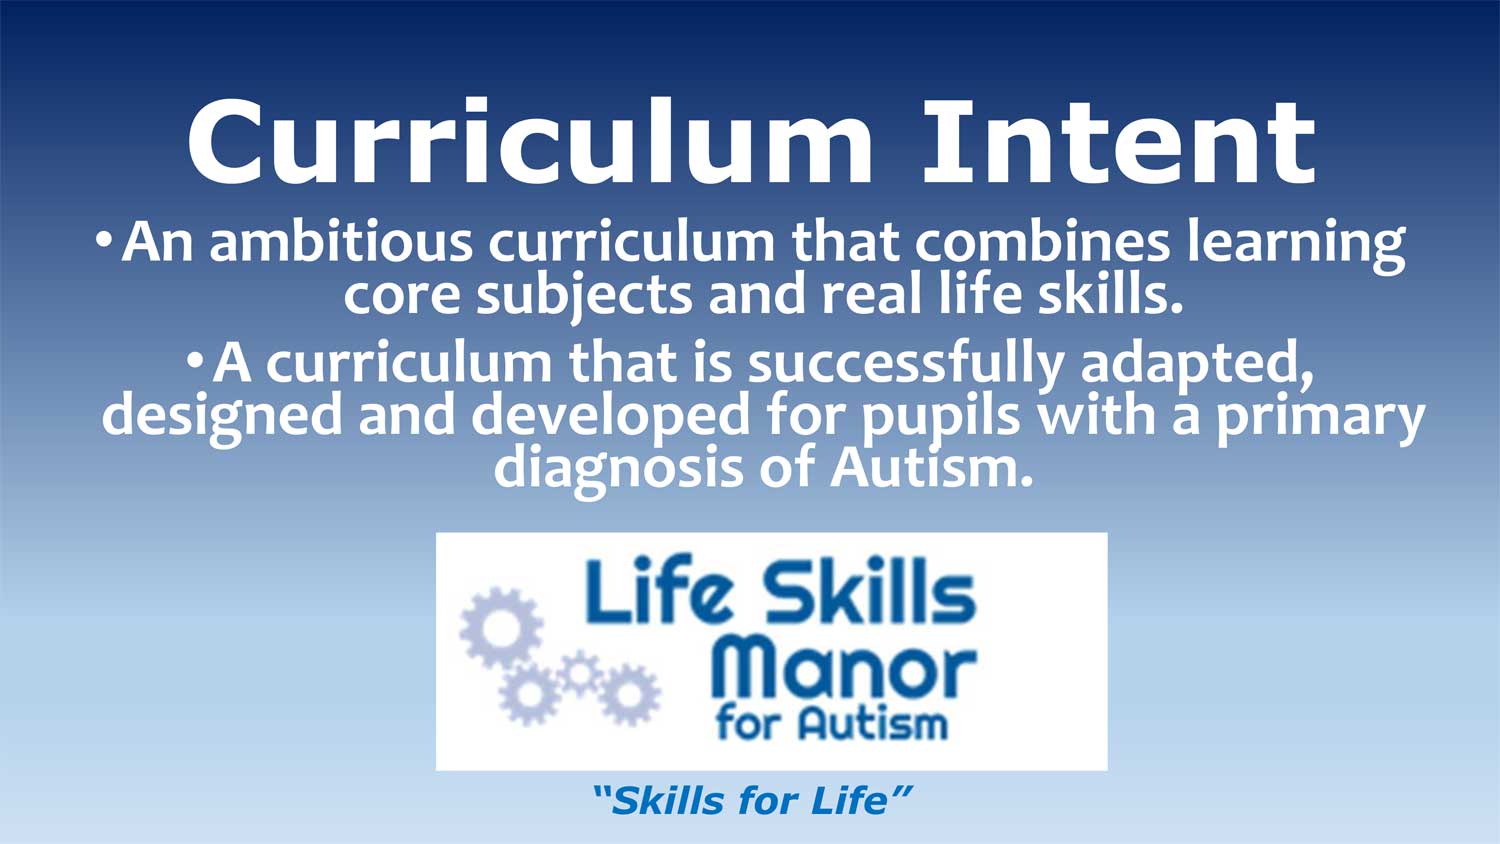 Our Curriculum Intent - Life Skills Manor